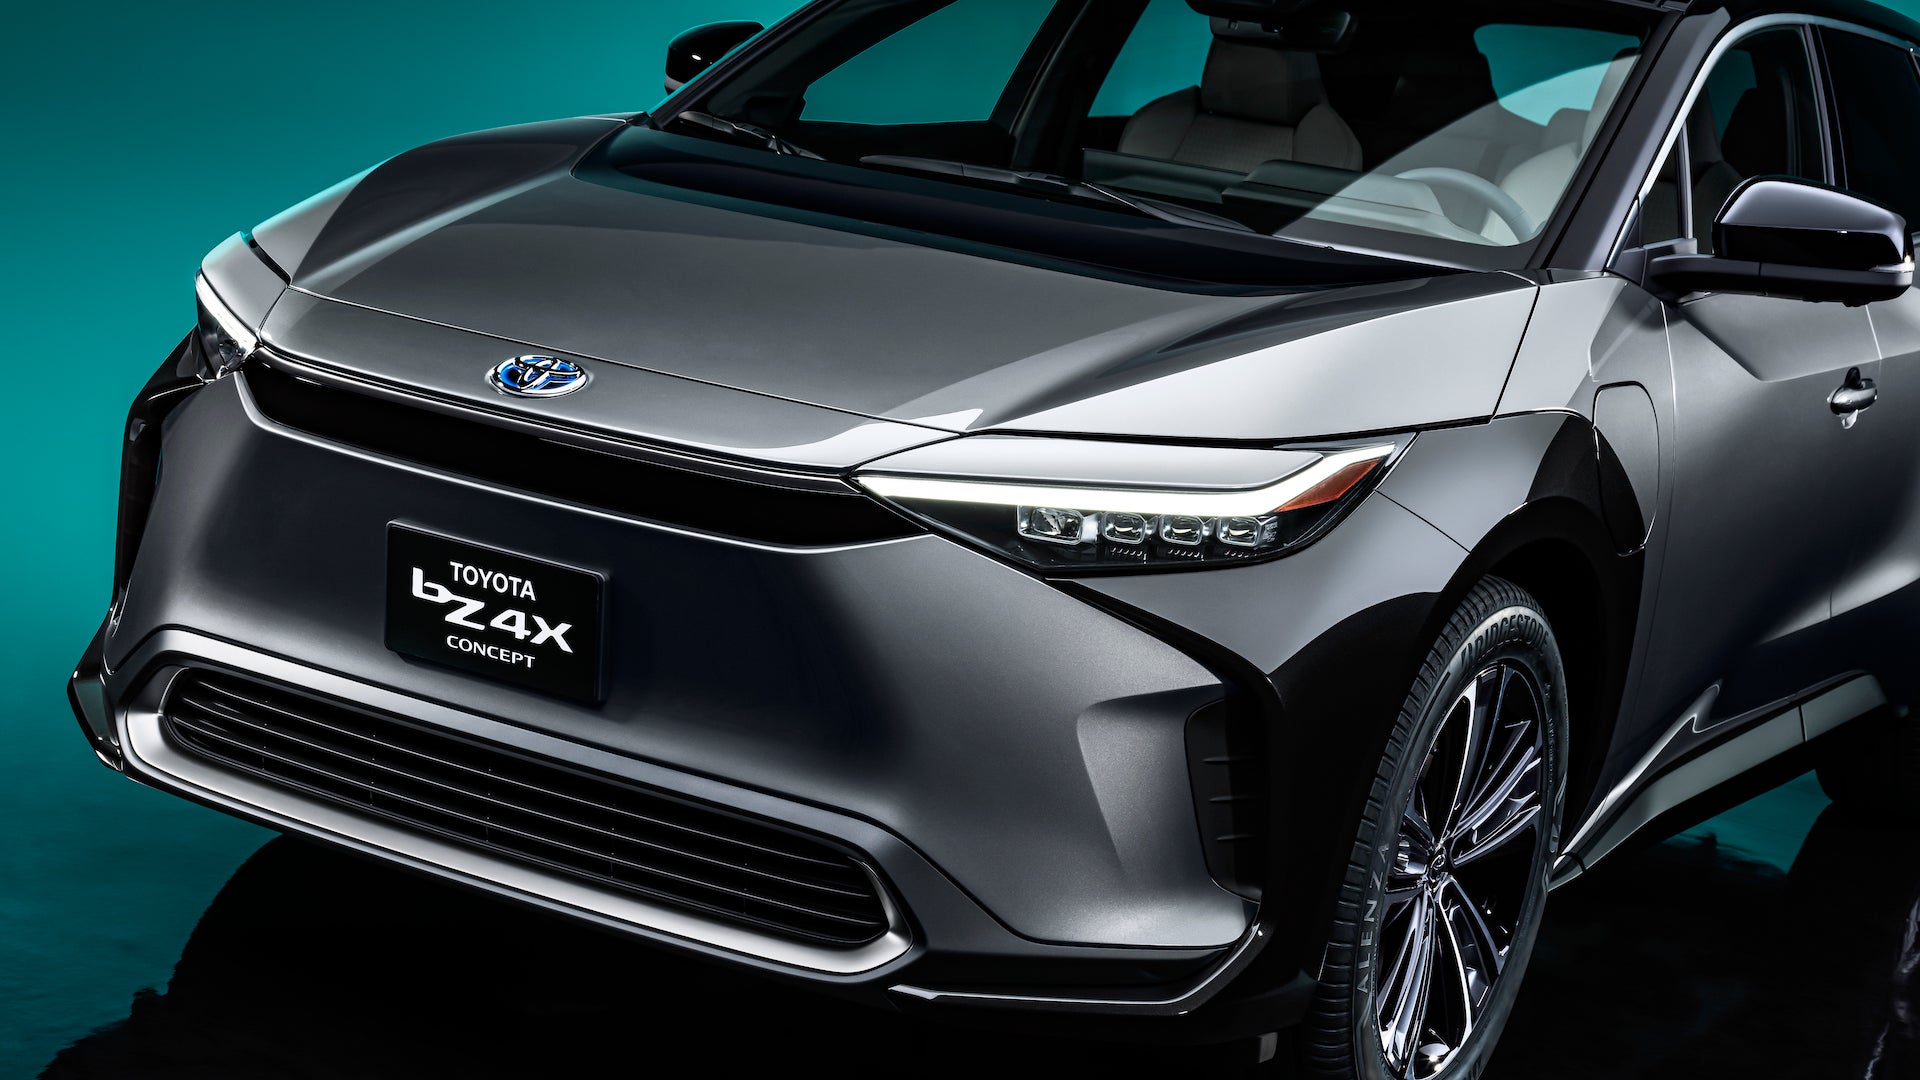 Toyota bZ4X Concept EV: A Sleek Electric Crossover With AWD by Subaru